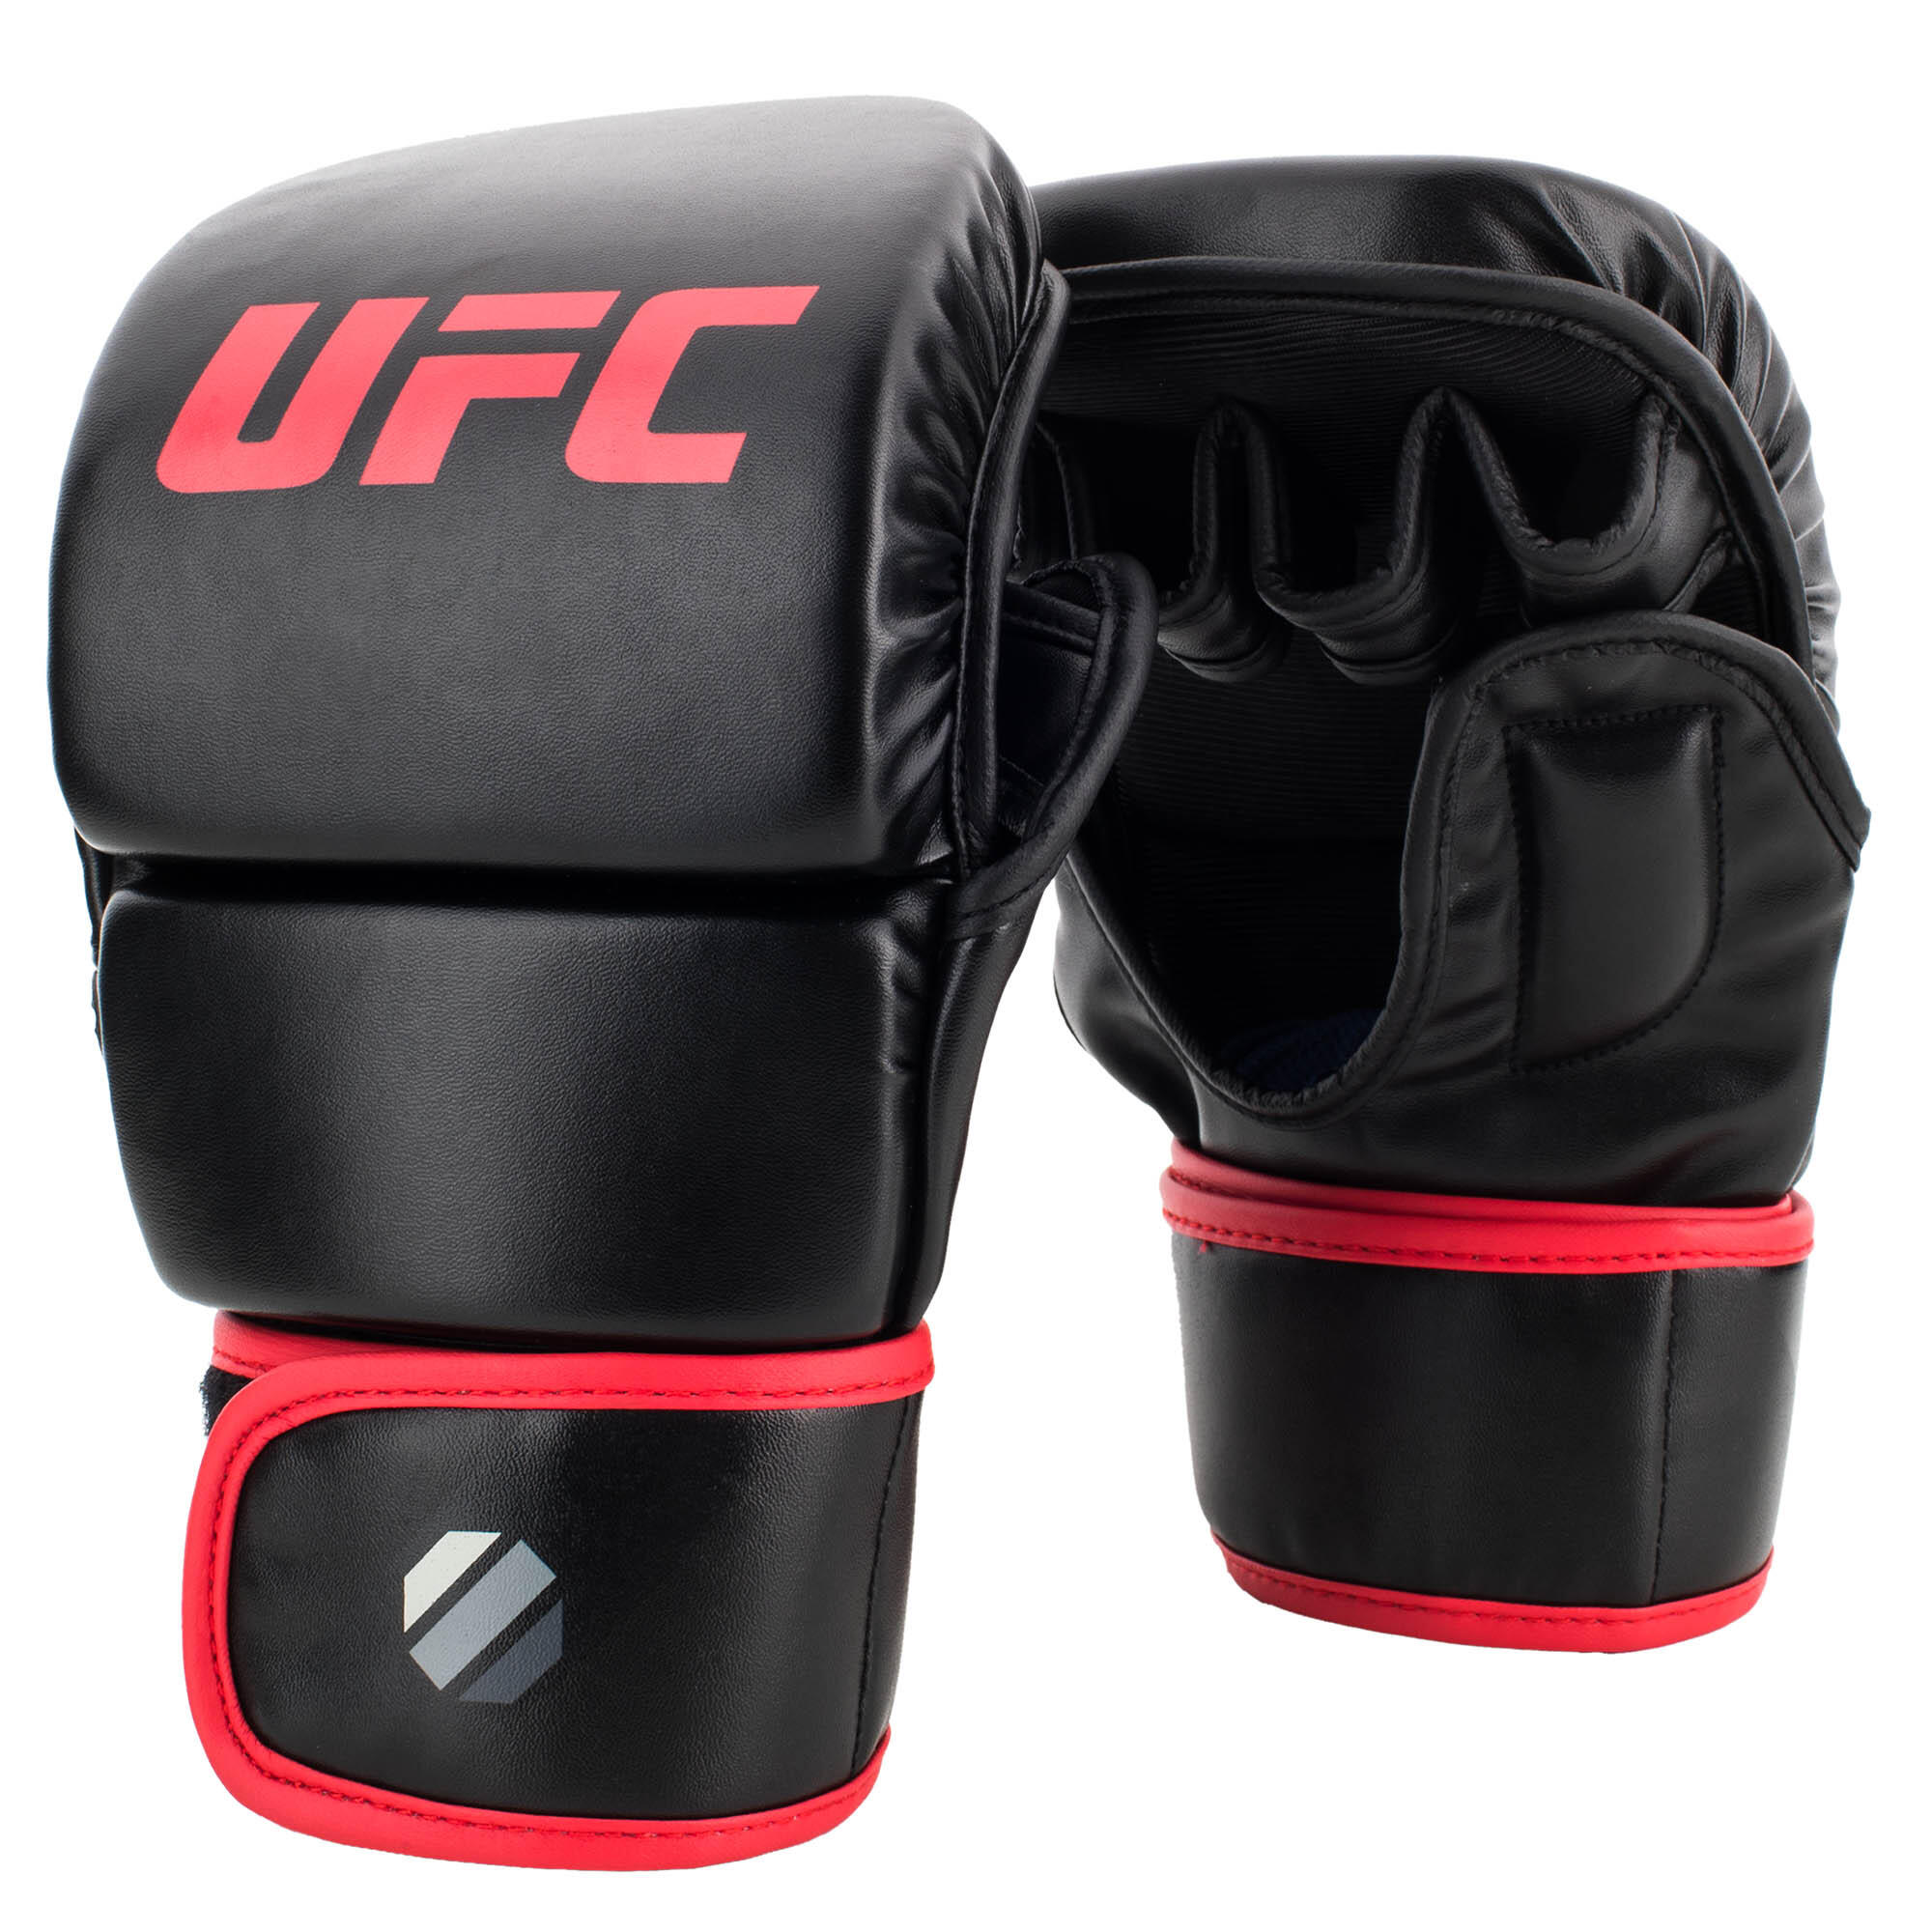 UFC UFC MMA 8oz Sparring Gloves - Black - L/XL